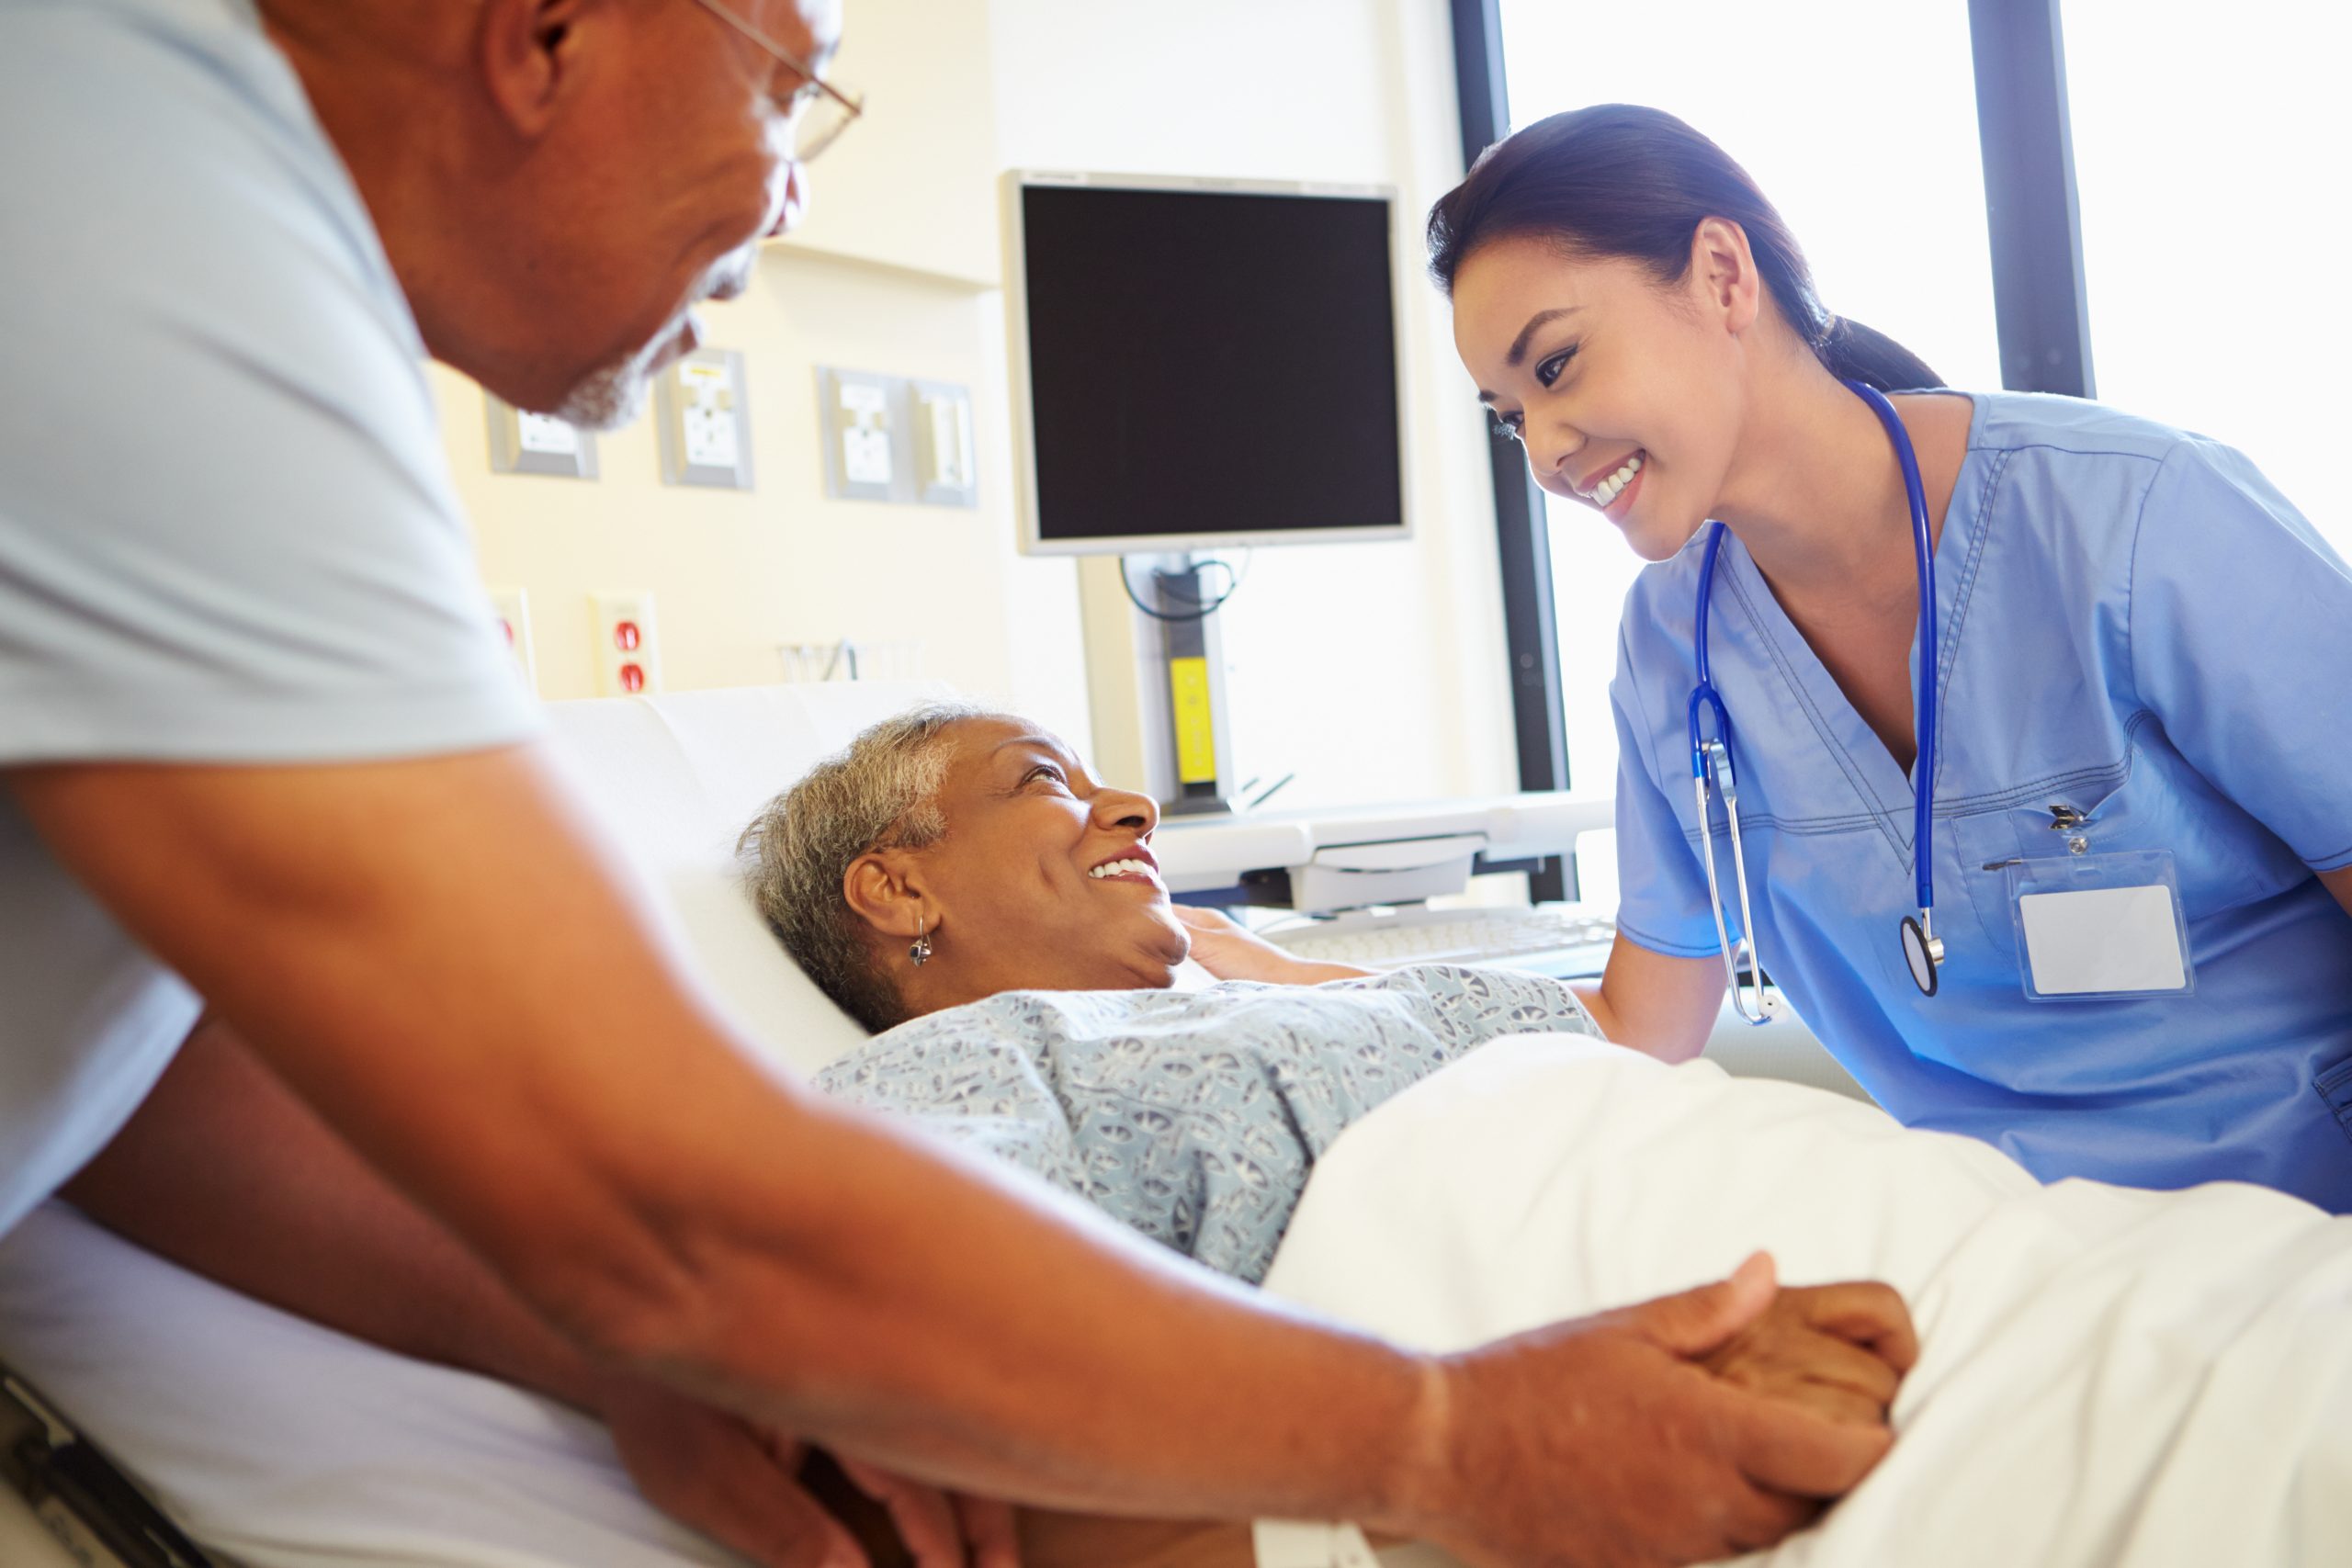 Top 3 Nursing Challenges of 2020